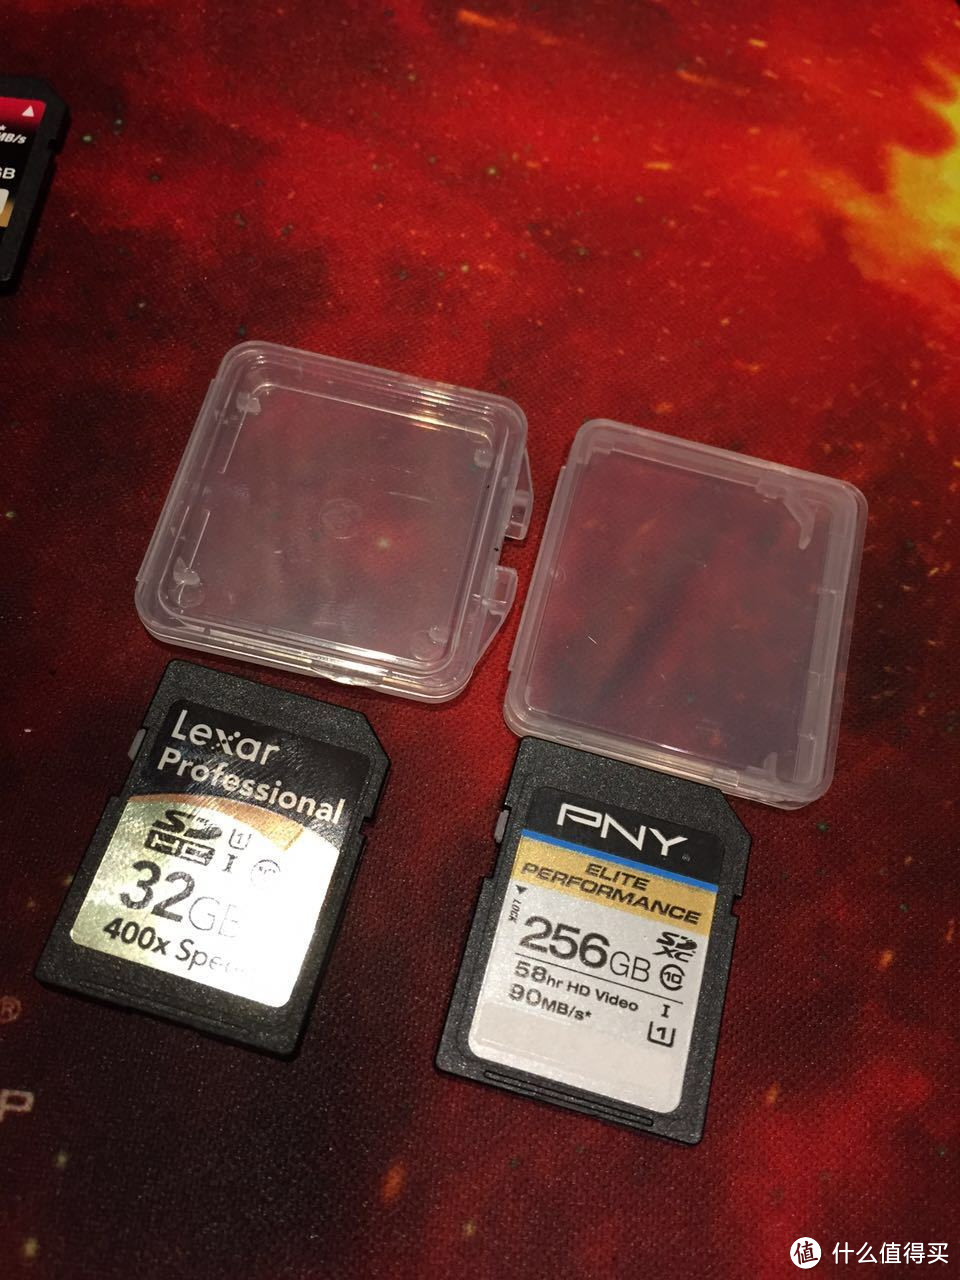 PNY 必恩威 Elite Performance 256GB SD存储卡